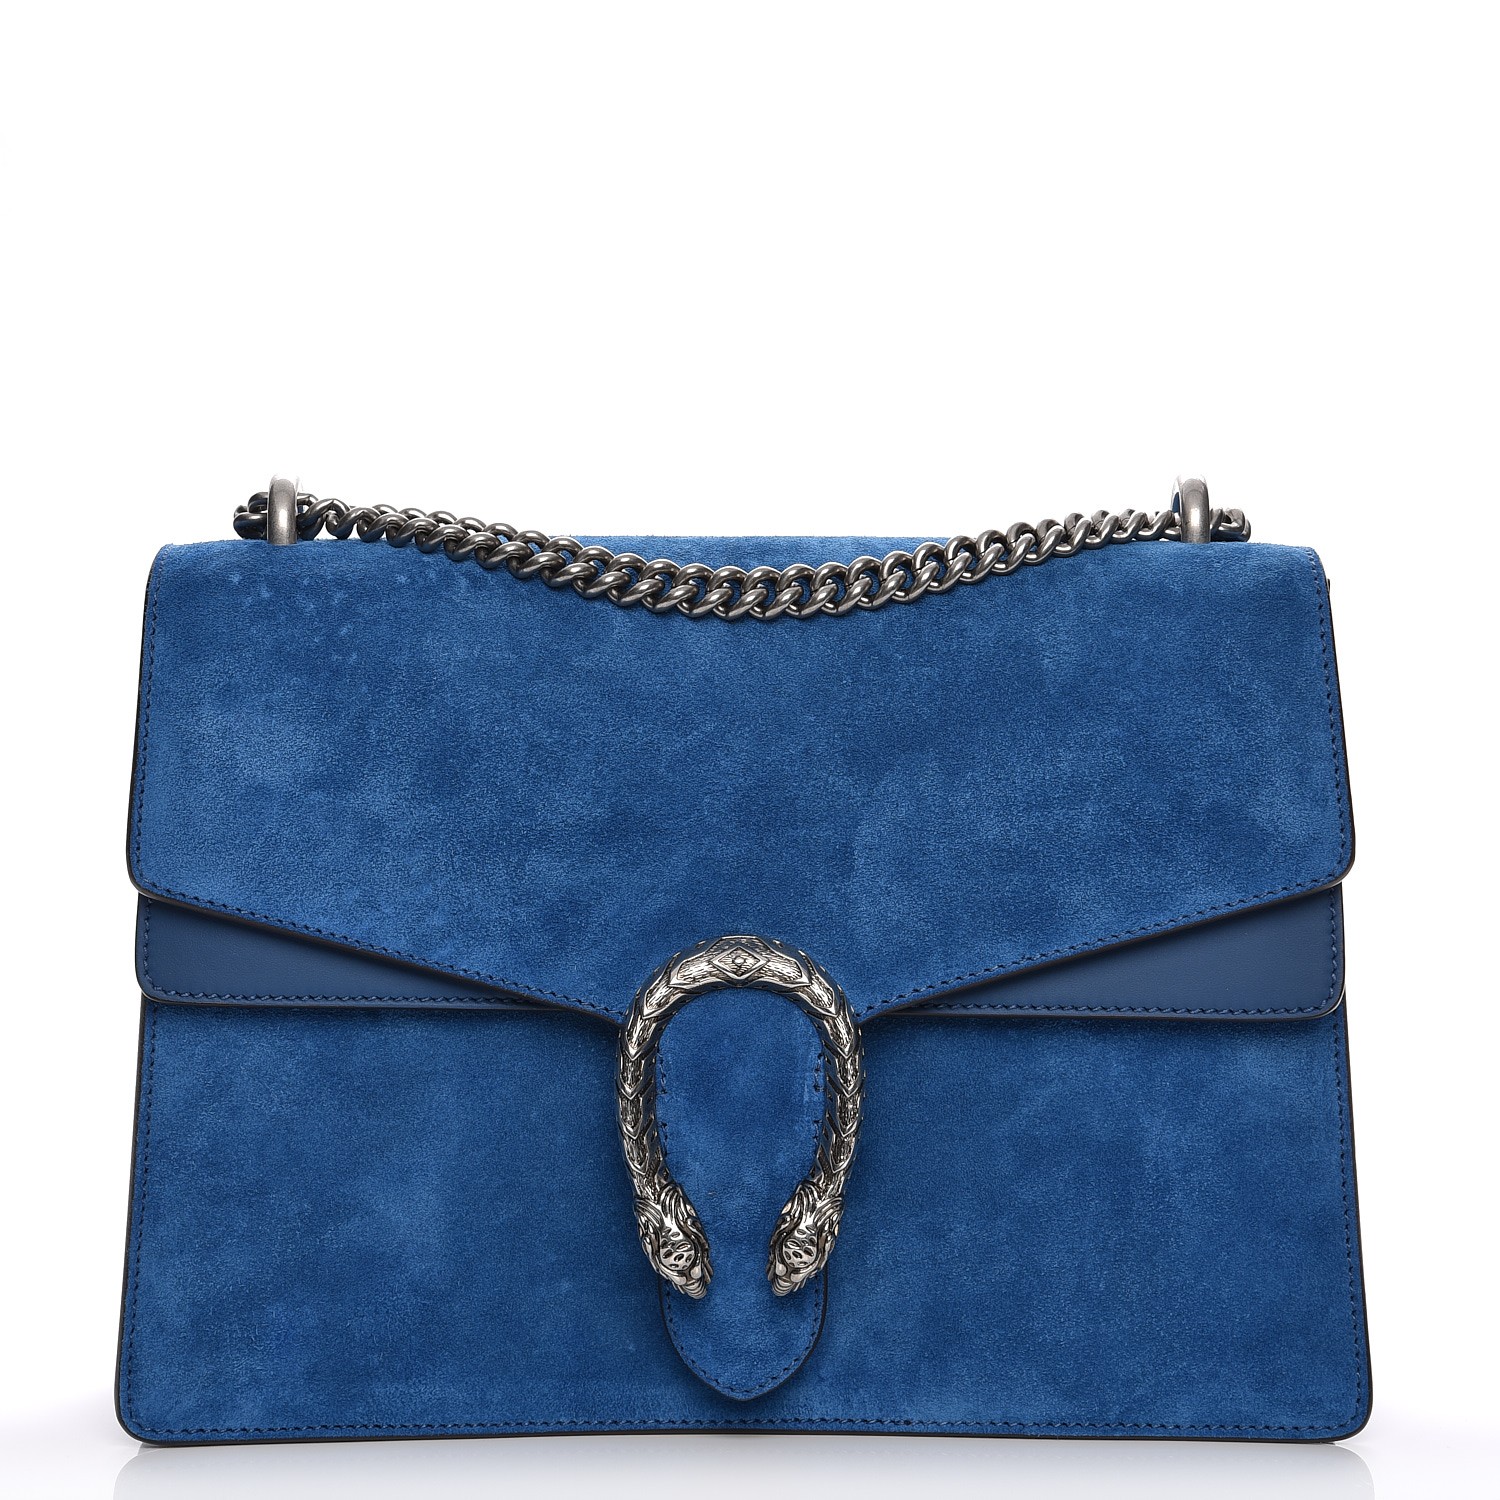 blue suede gucci bag